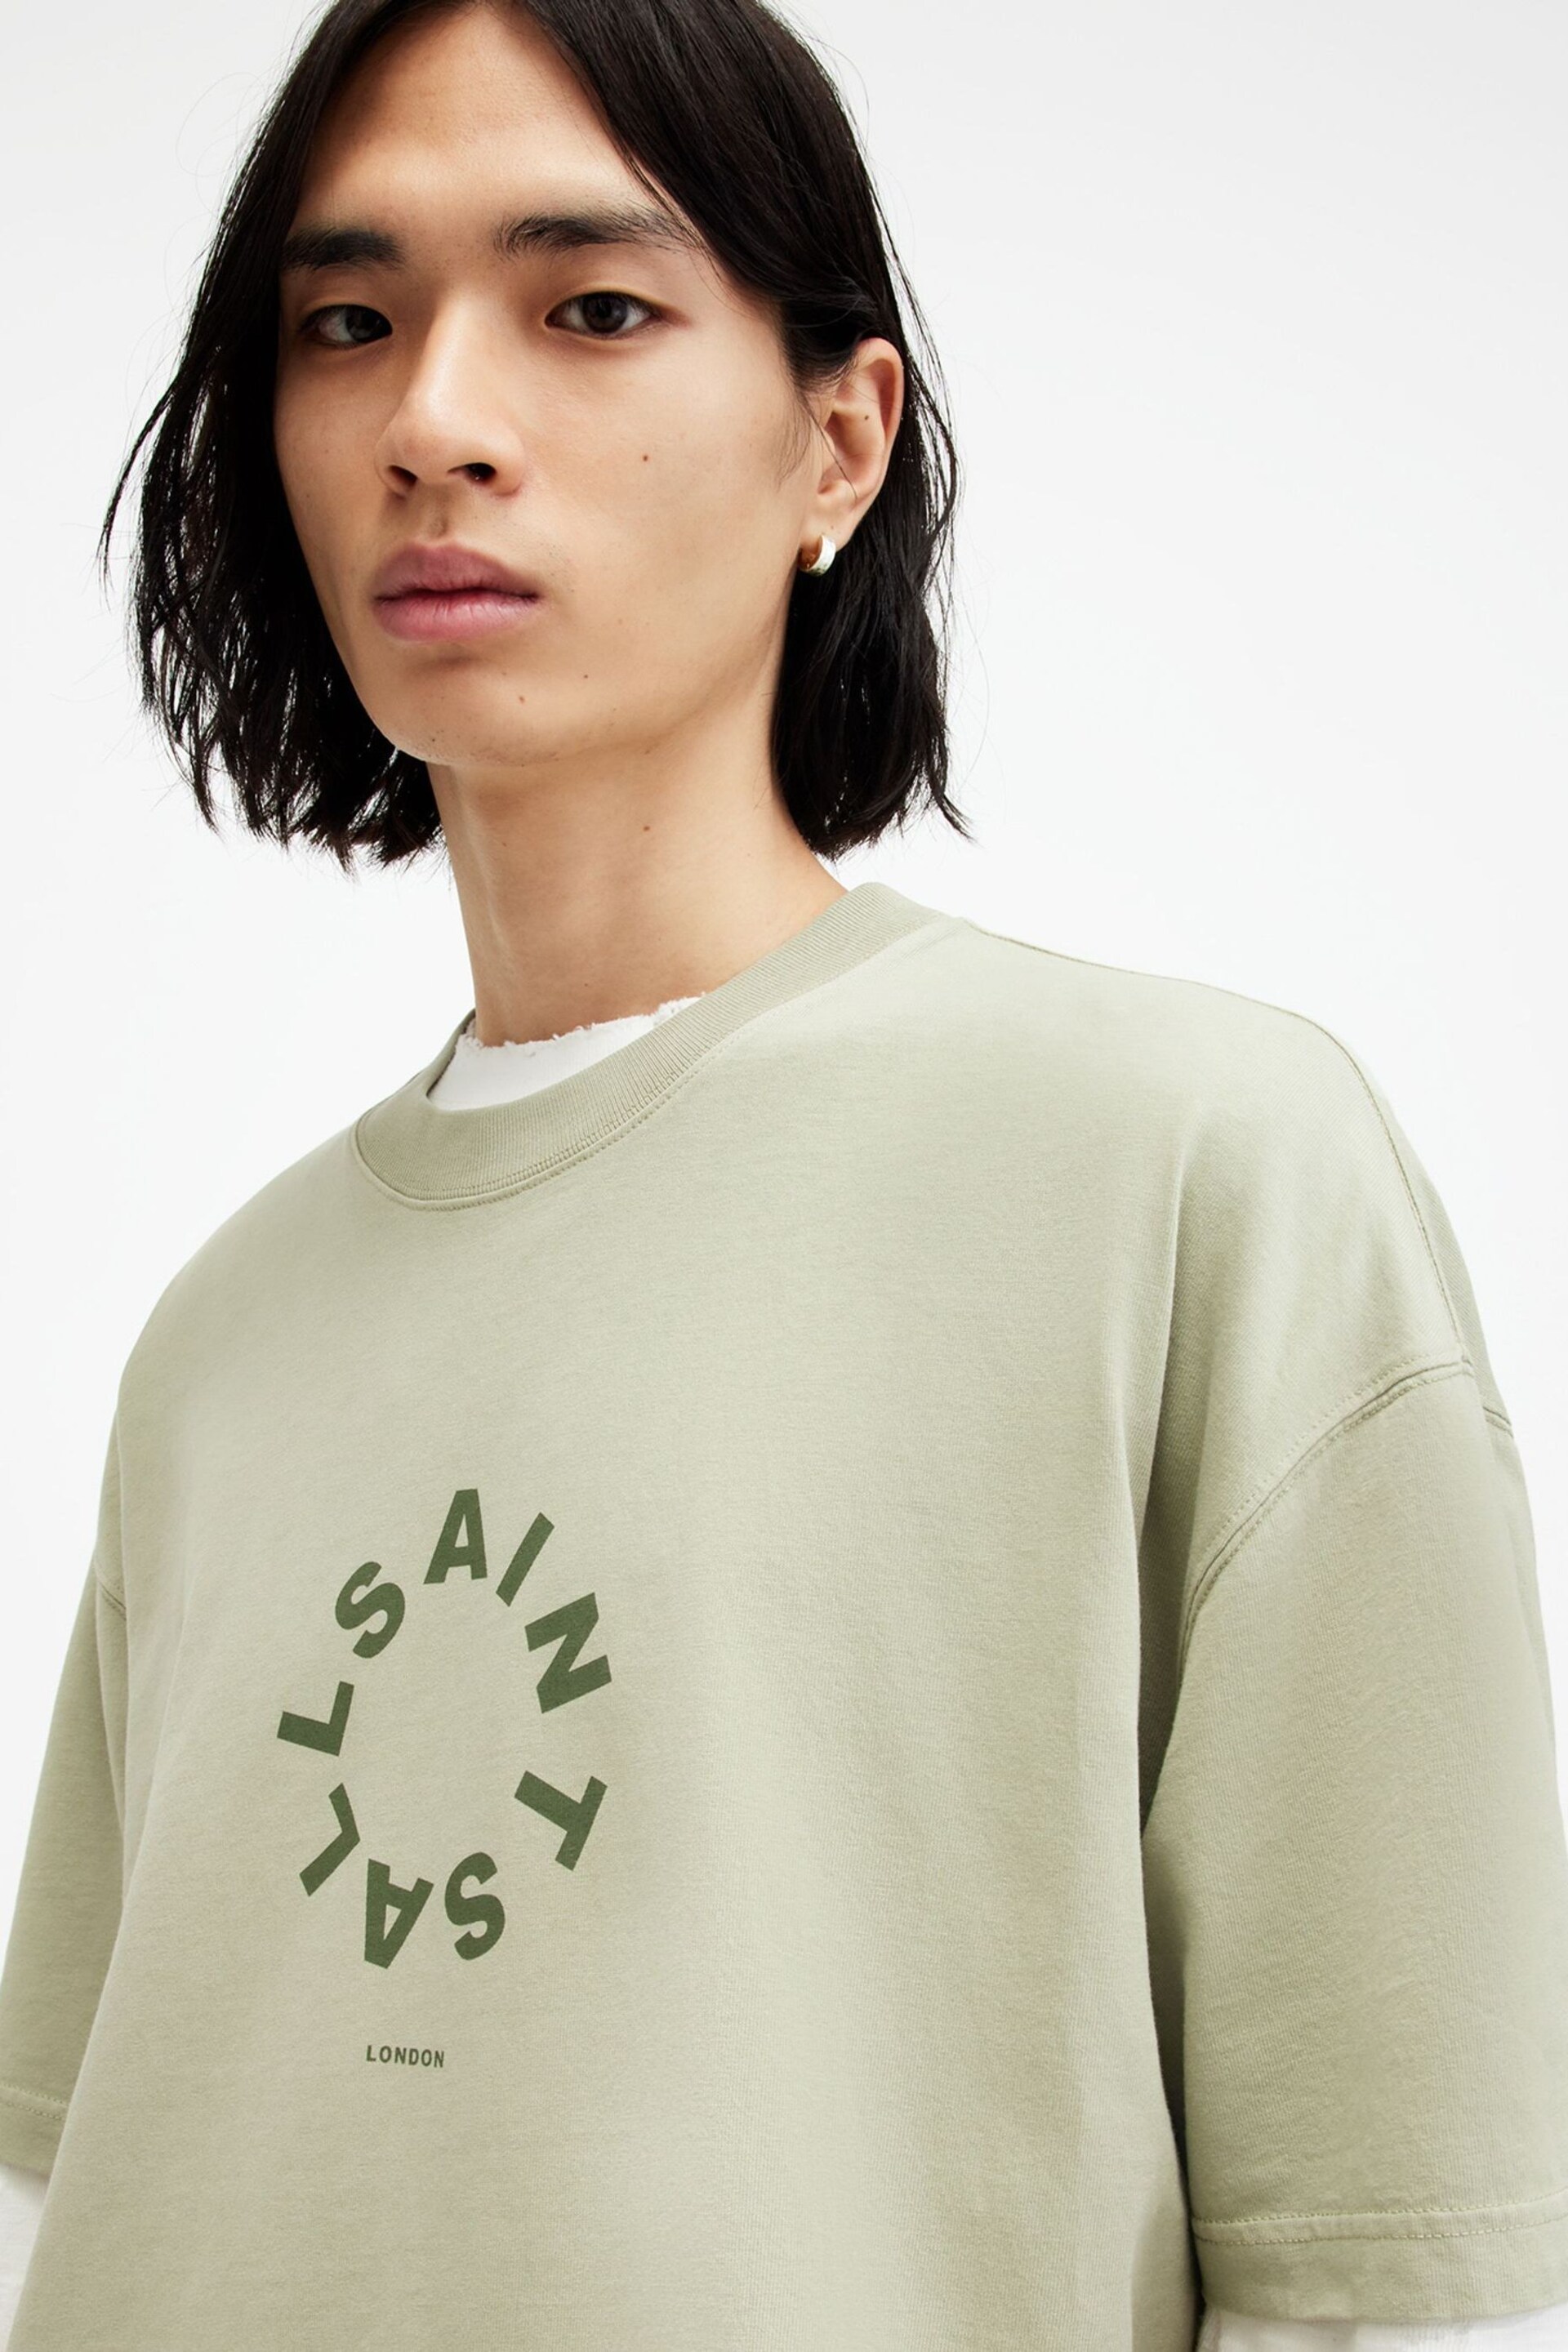 AllSaints Green Tierra Short Sleeve Crew T-Shirt - Image 5 of 7